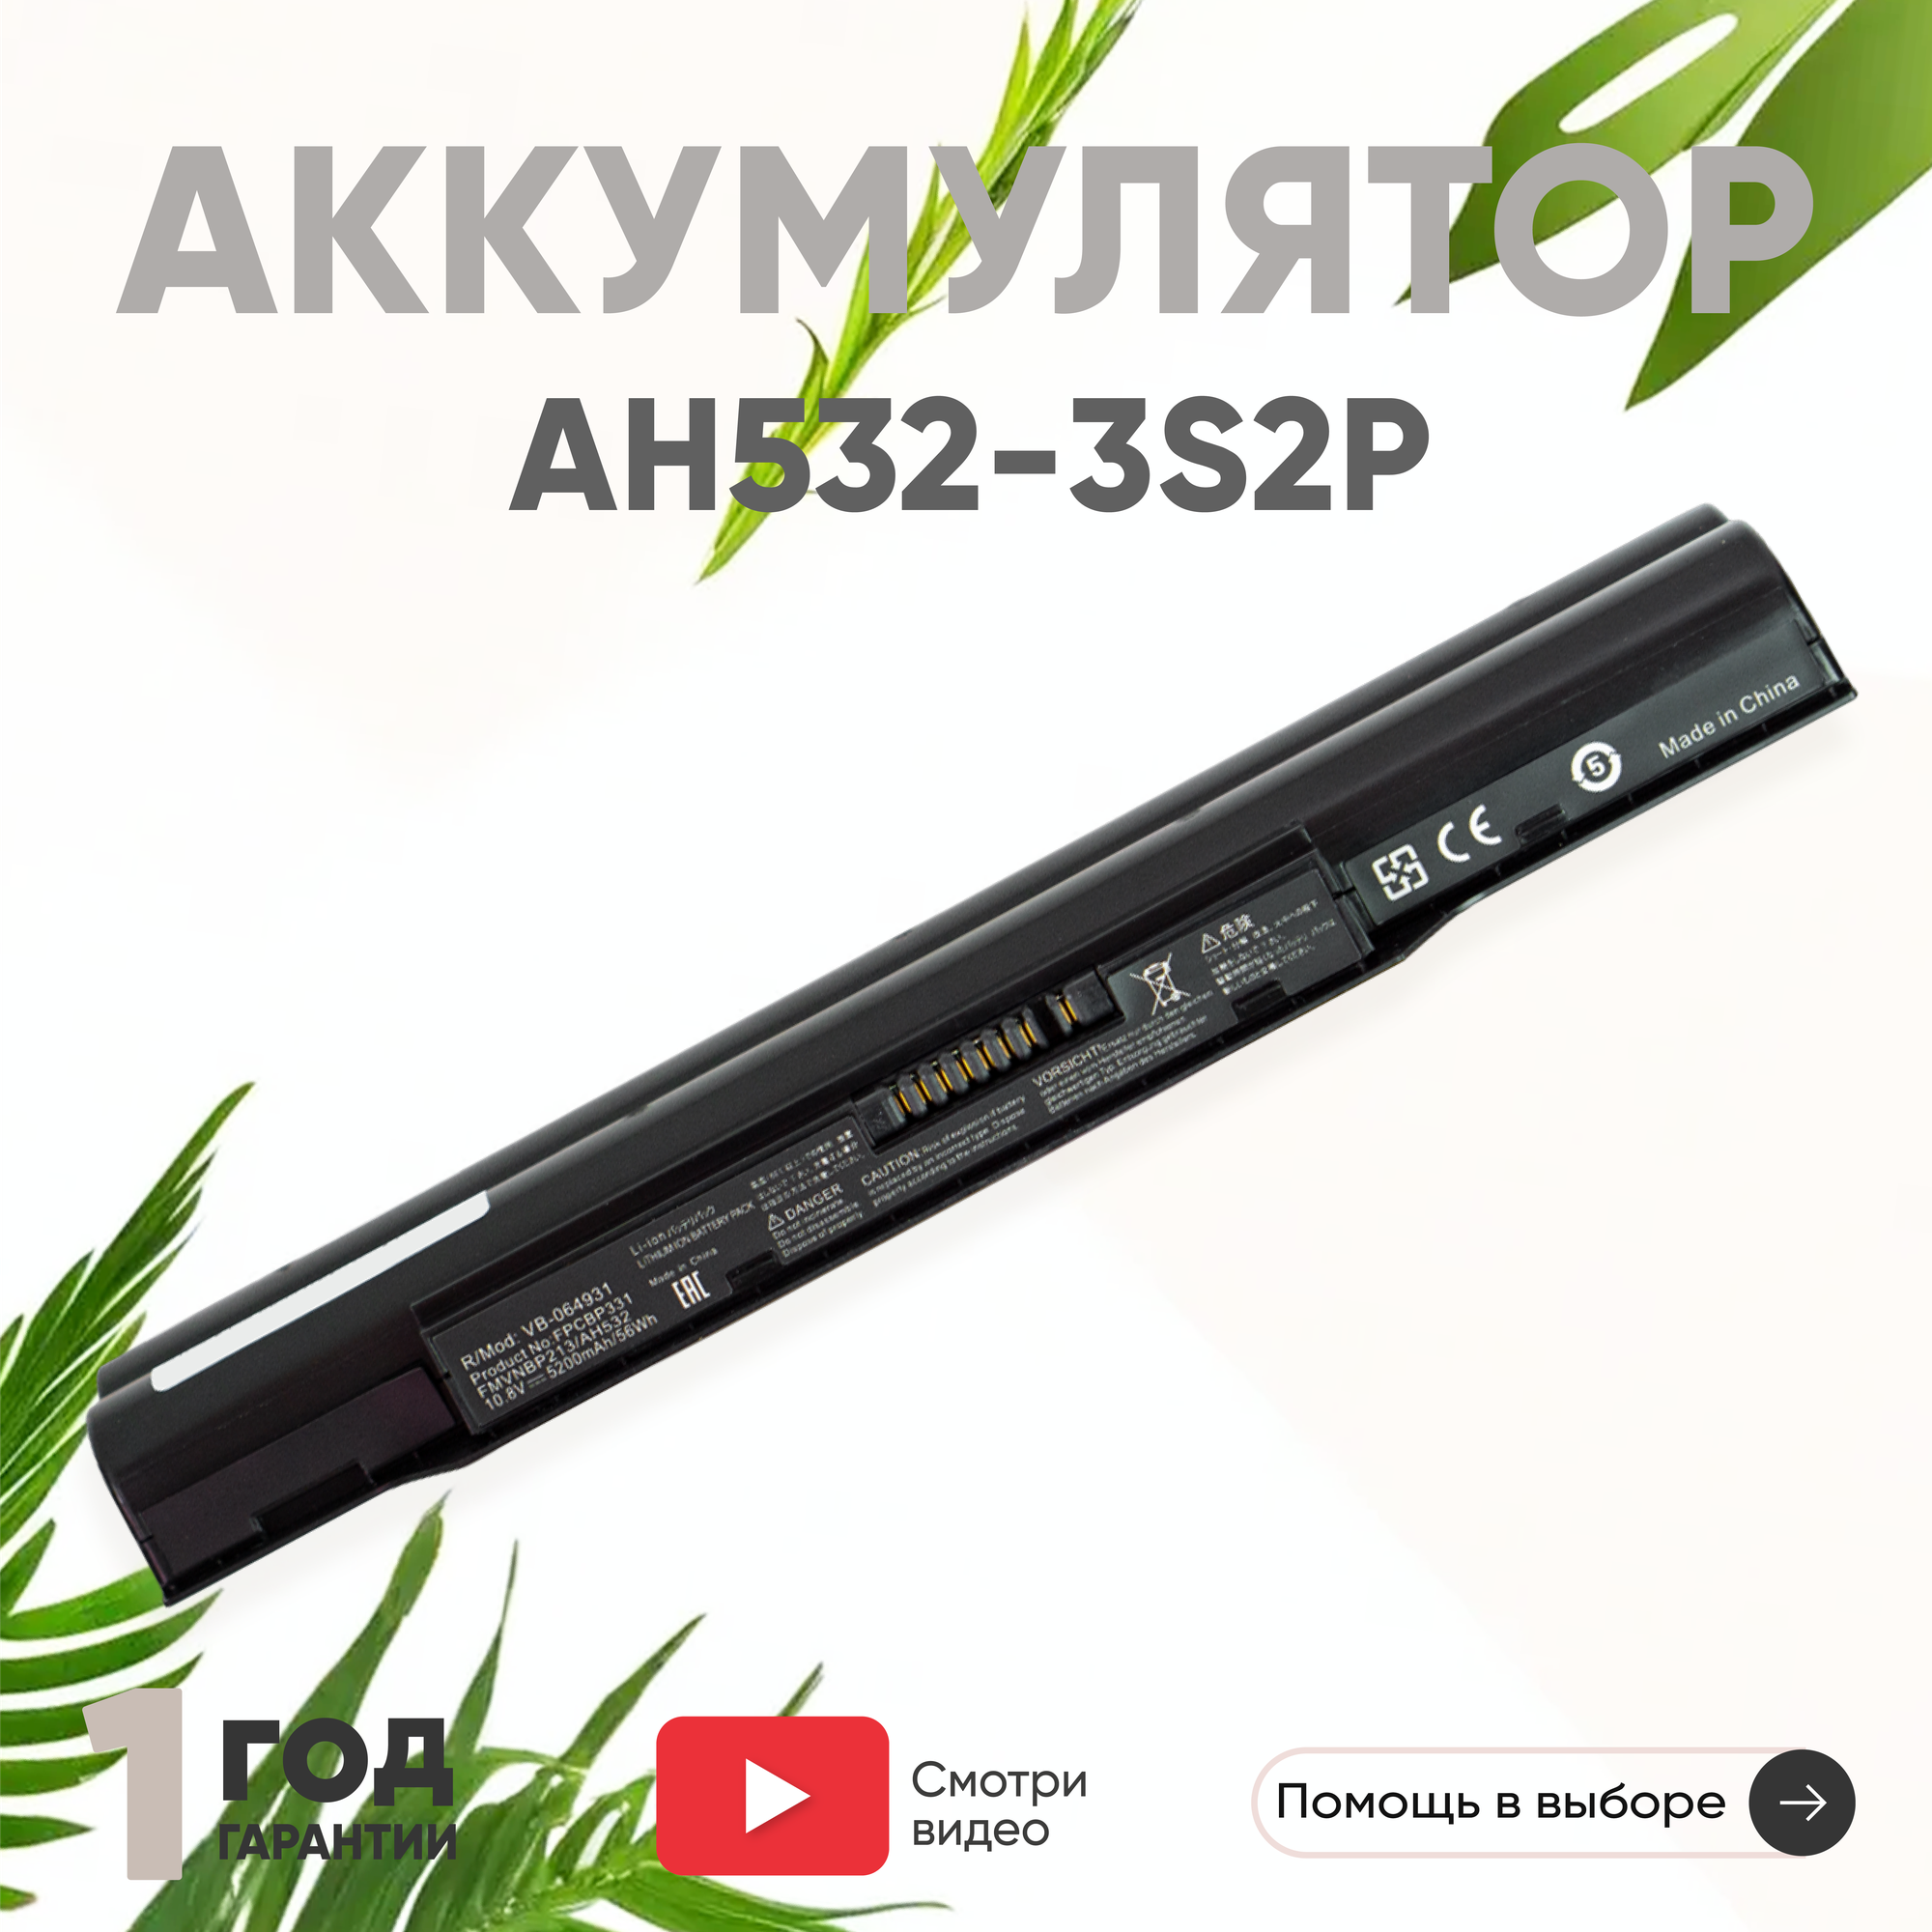 Аккумулятор (АКБ аккумуляторная батарея) AH532-3S2P для ноутбука Fujitsu LifeBook A532 10.8В 4400мАч черная